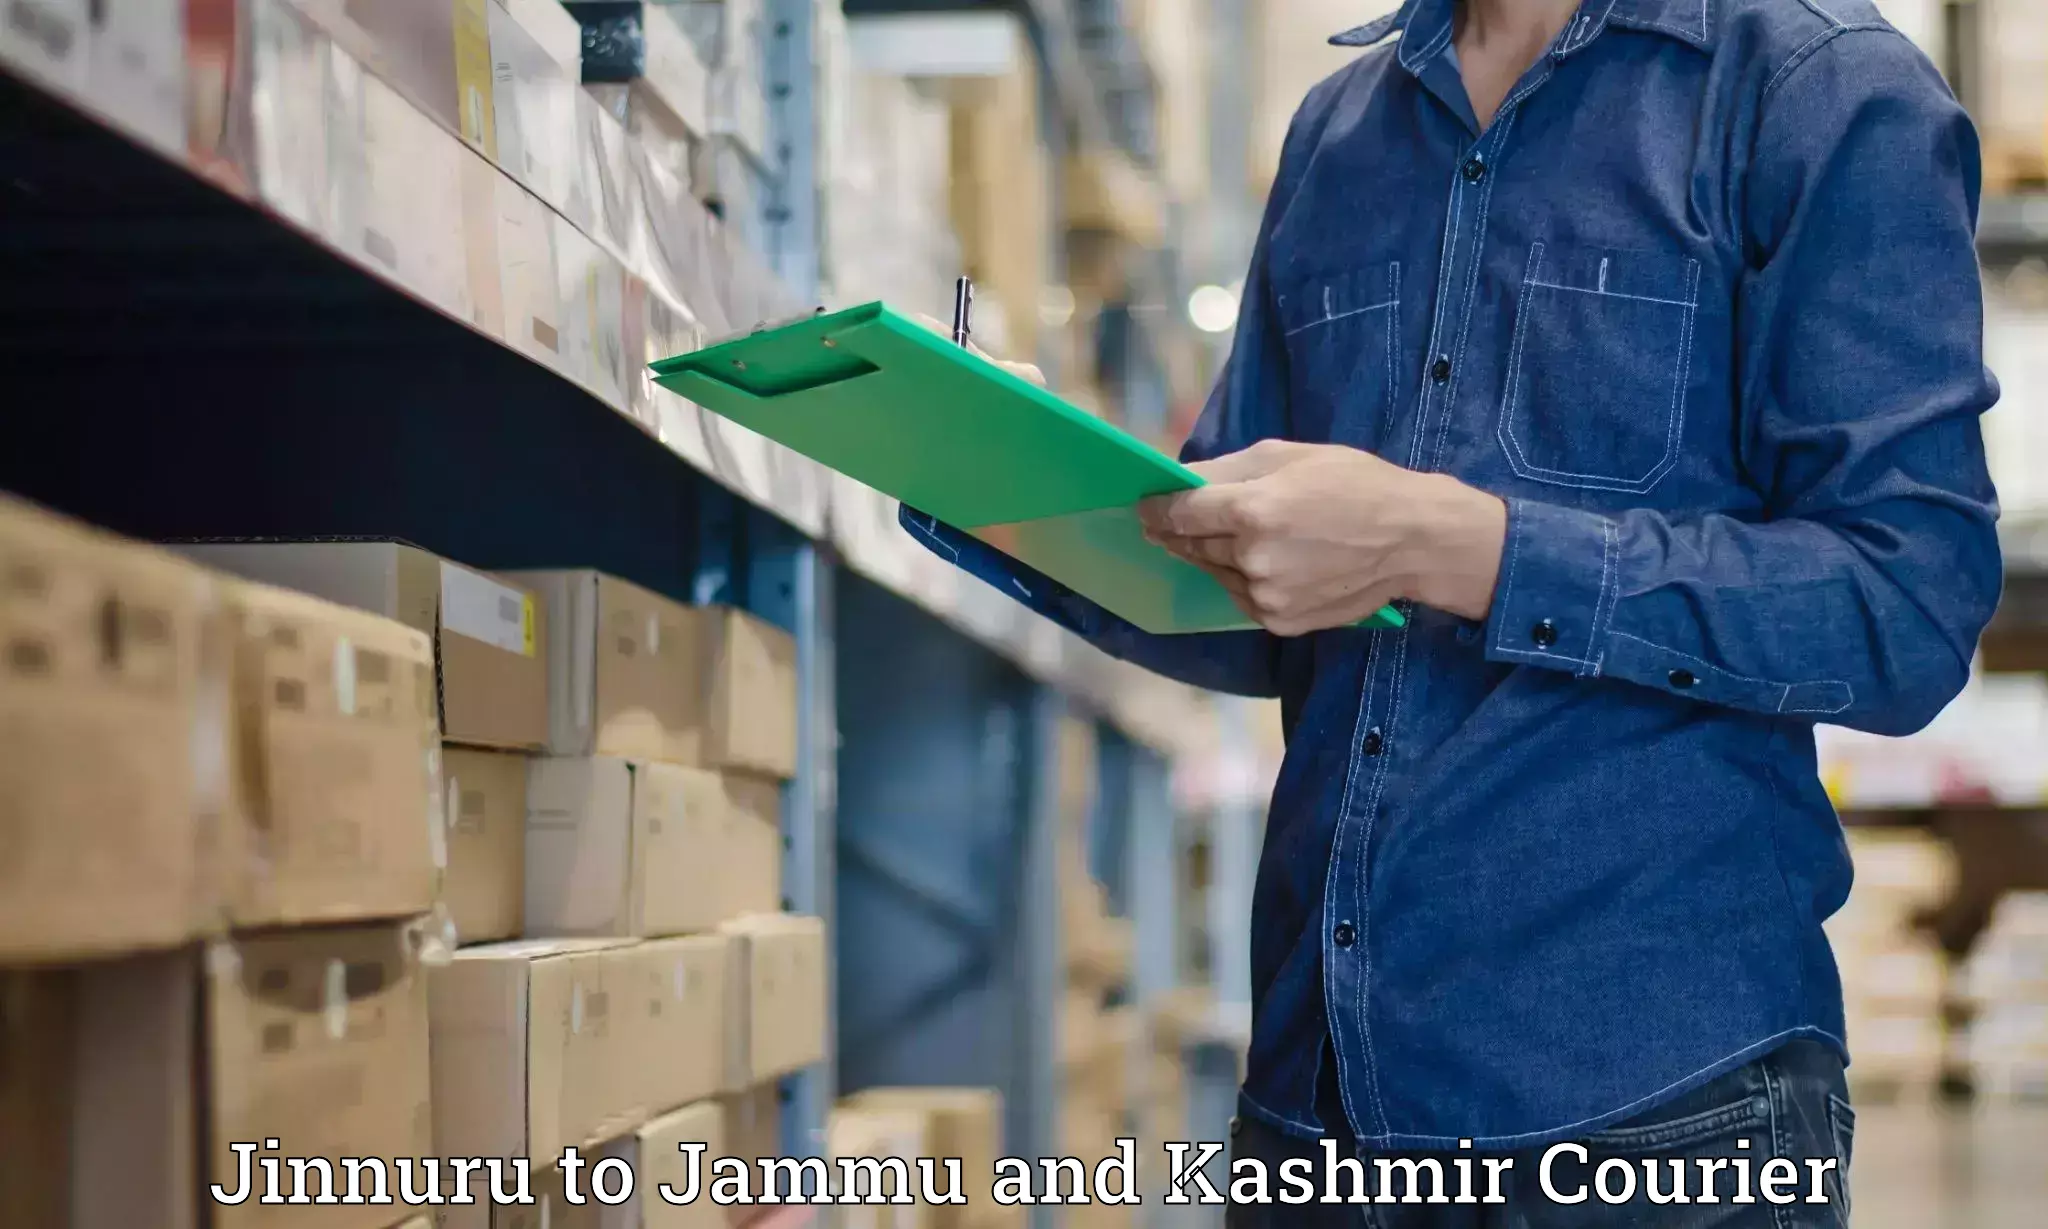 Versatile courier options Jinnuru to Bandipur